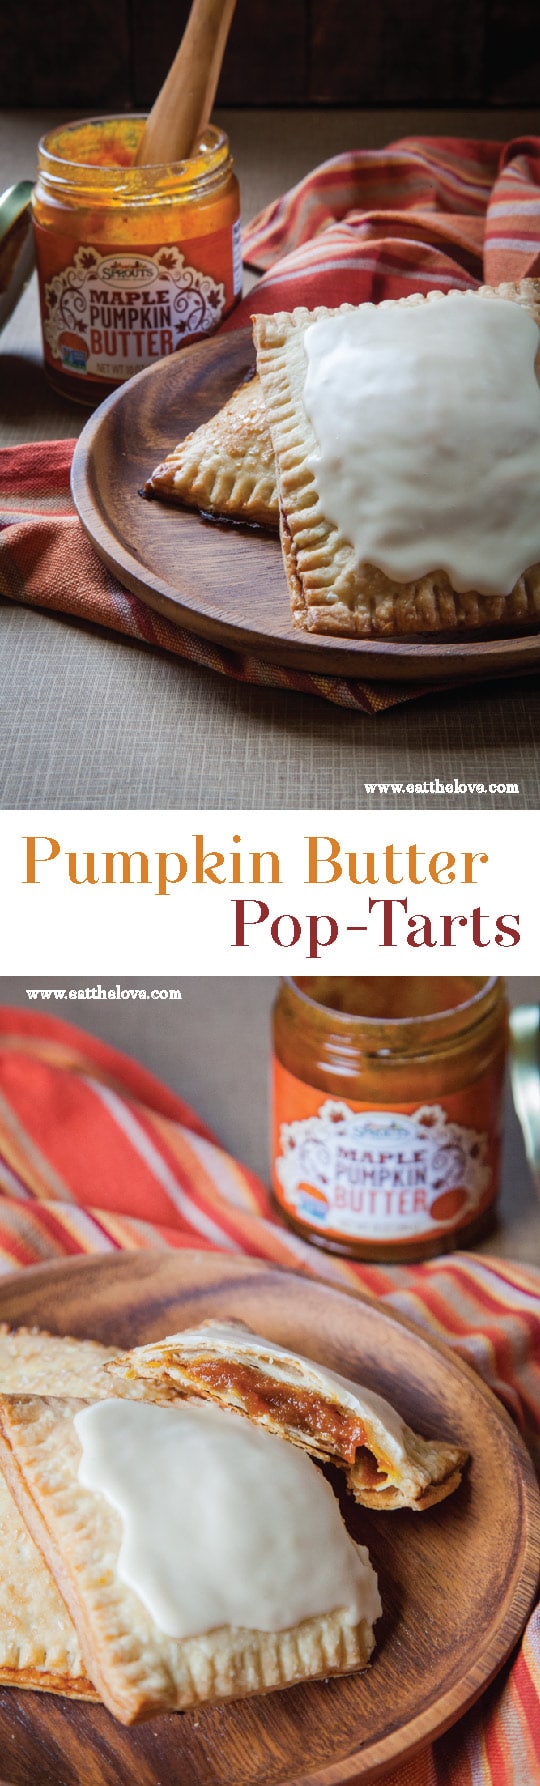 Homemade Pumpkin Butter Pop-Tarts are fun to make and eat!